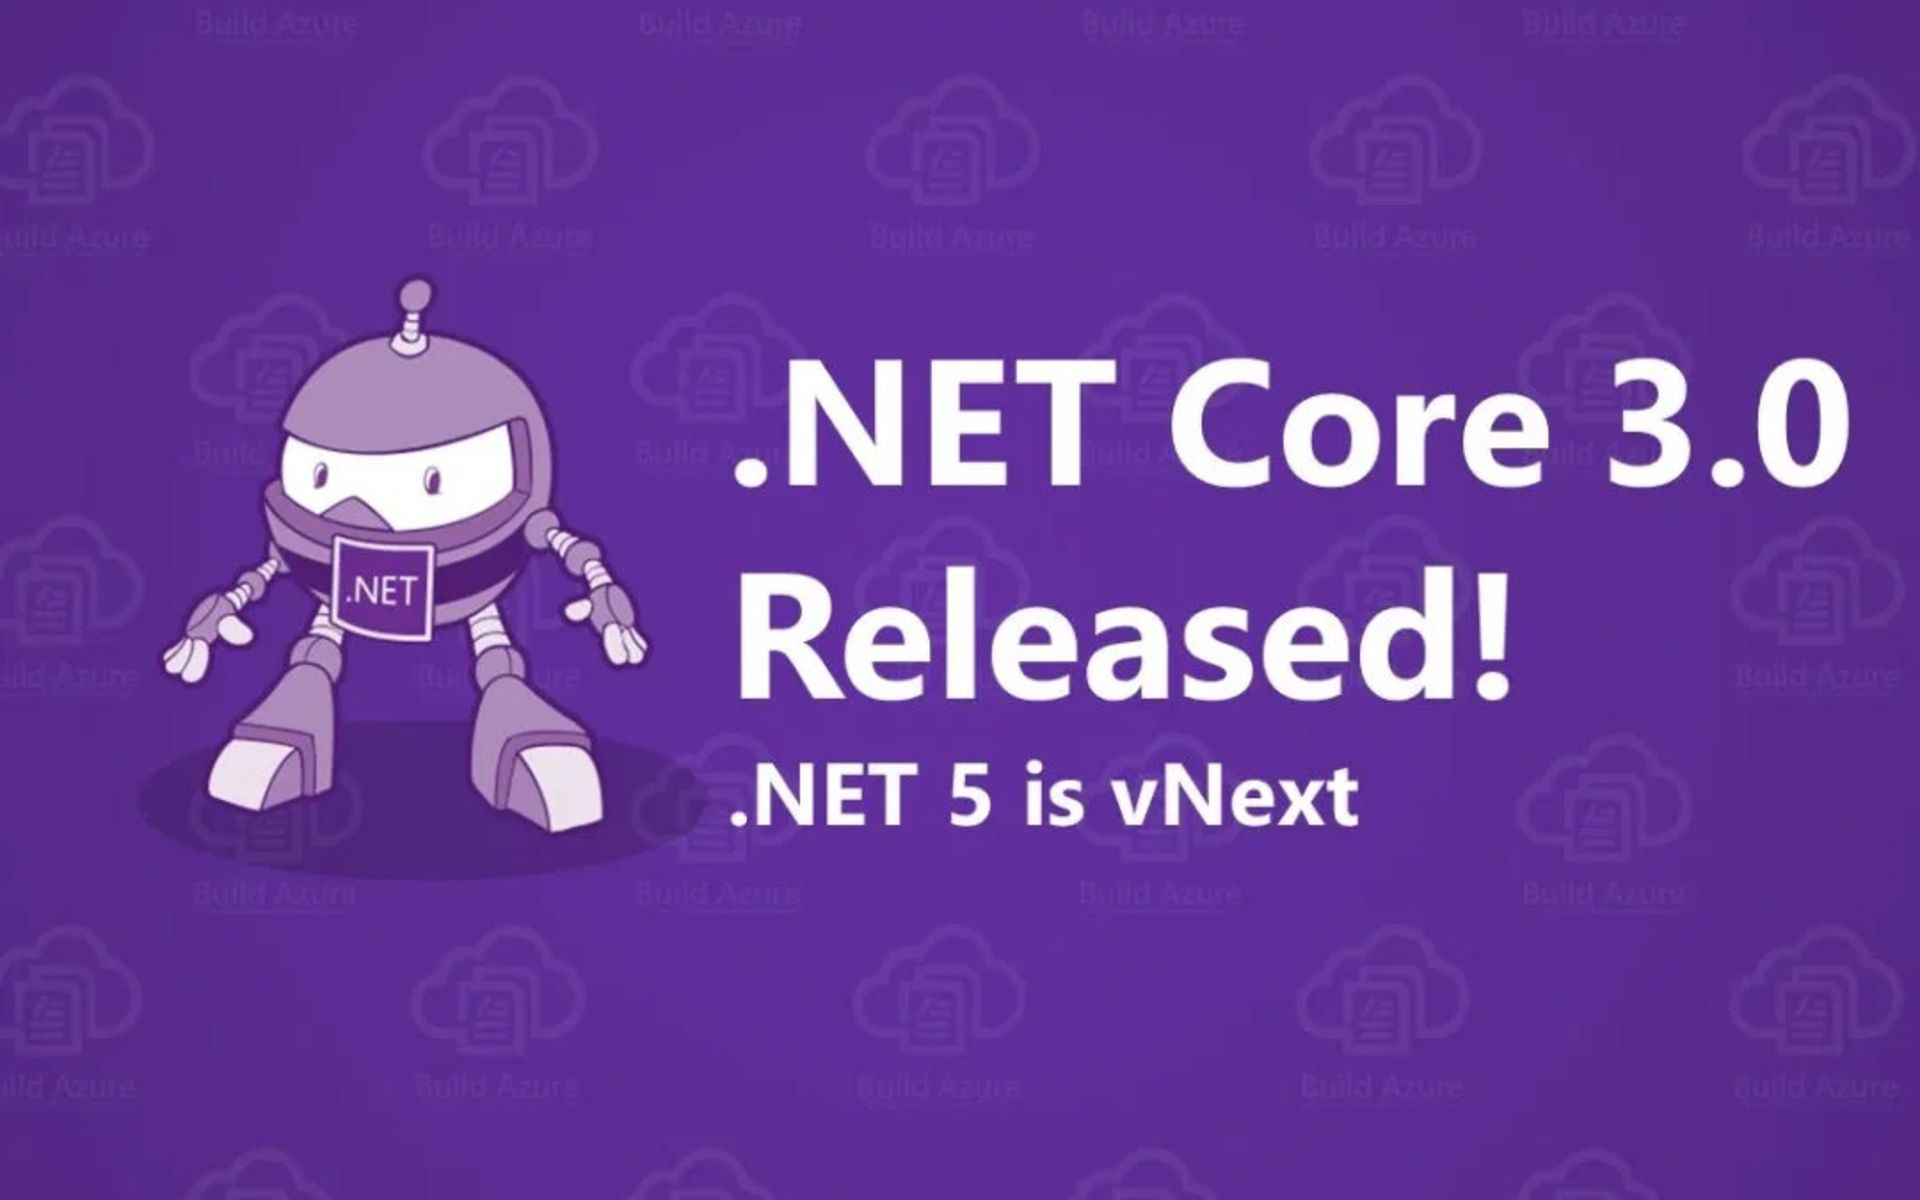 دات نت کور 3 / .net core 3.0